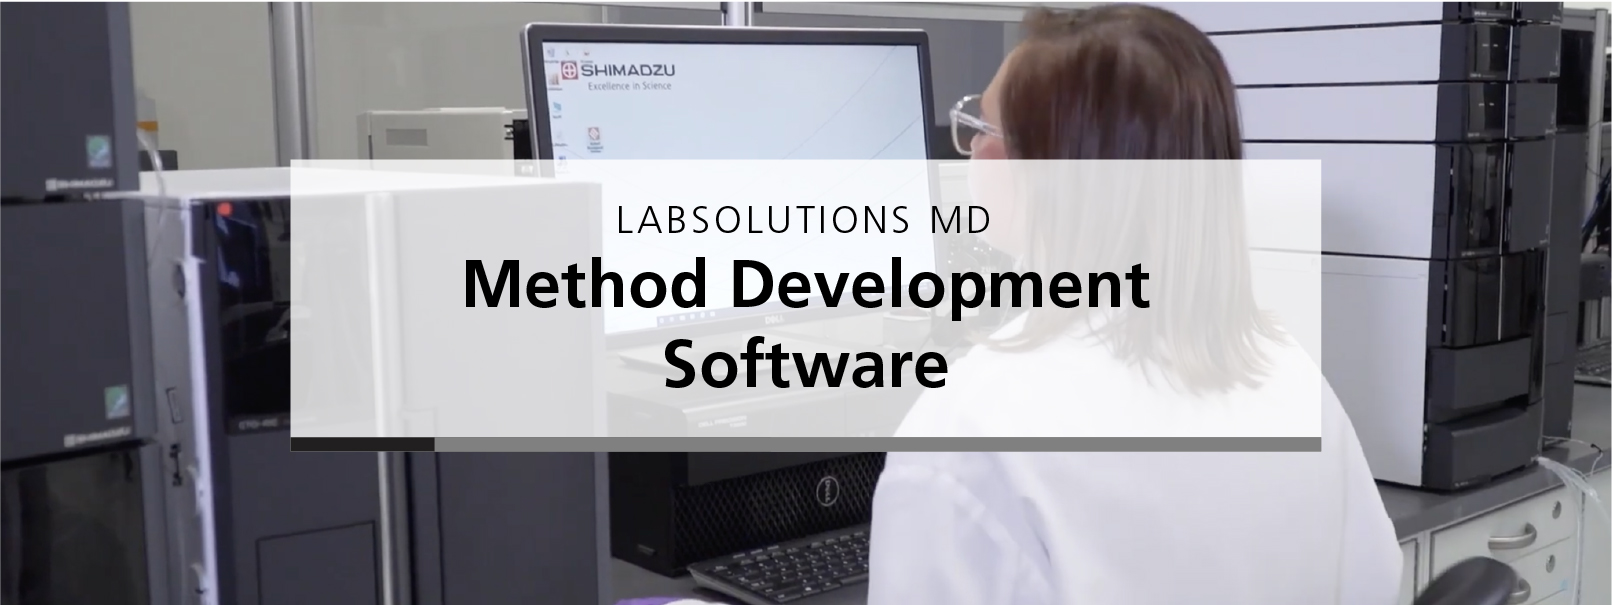 LabSolutions MD Method Development Software